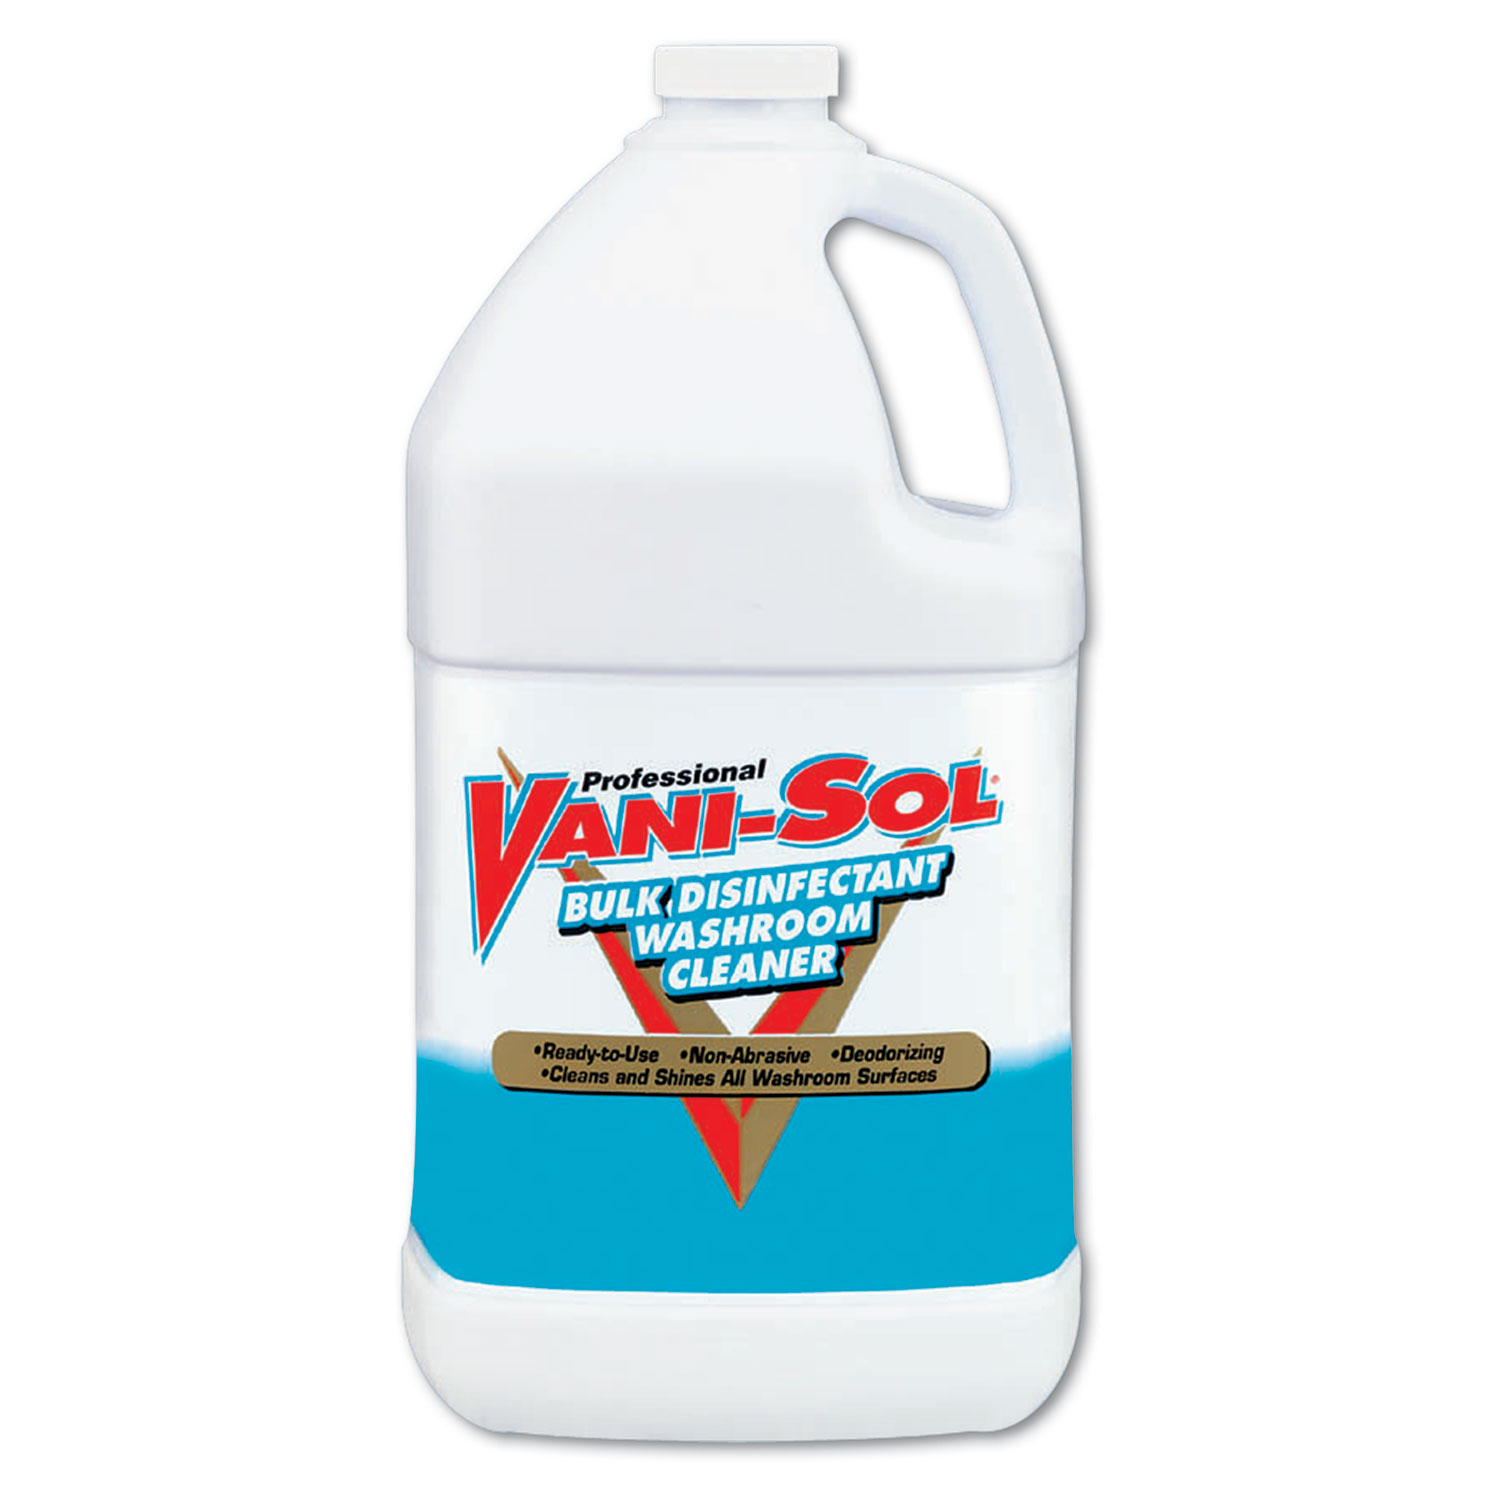  Professional VANI-SOL 36241-00294 Bulk Disinfectant Washroom Cleaner, 1 gal Bottle, 4/Carton (RAC00294) 